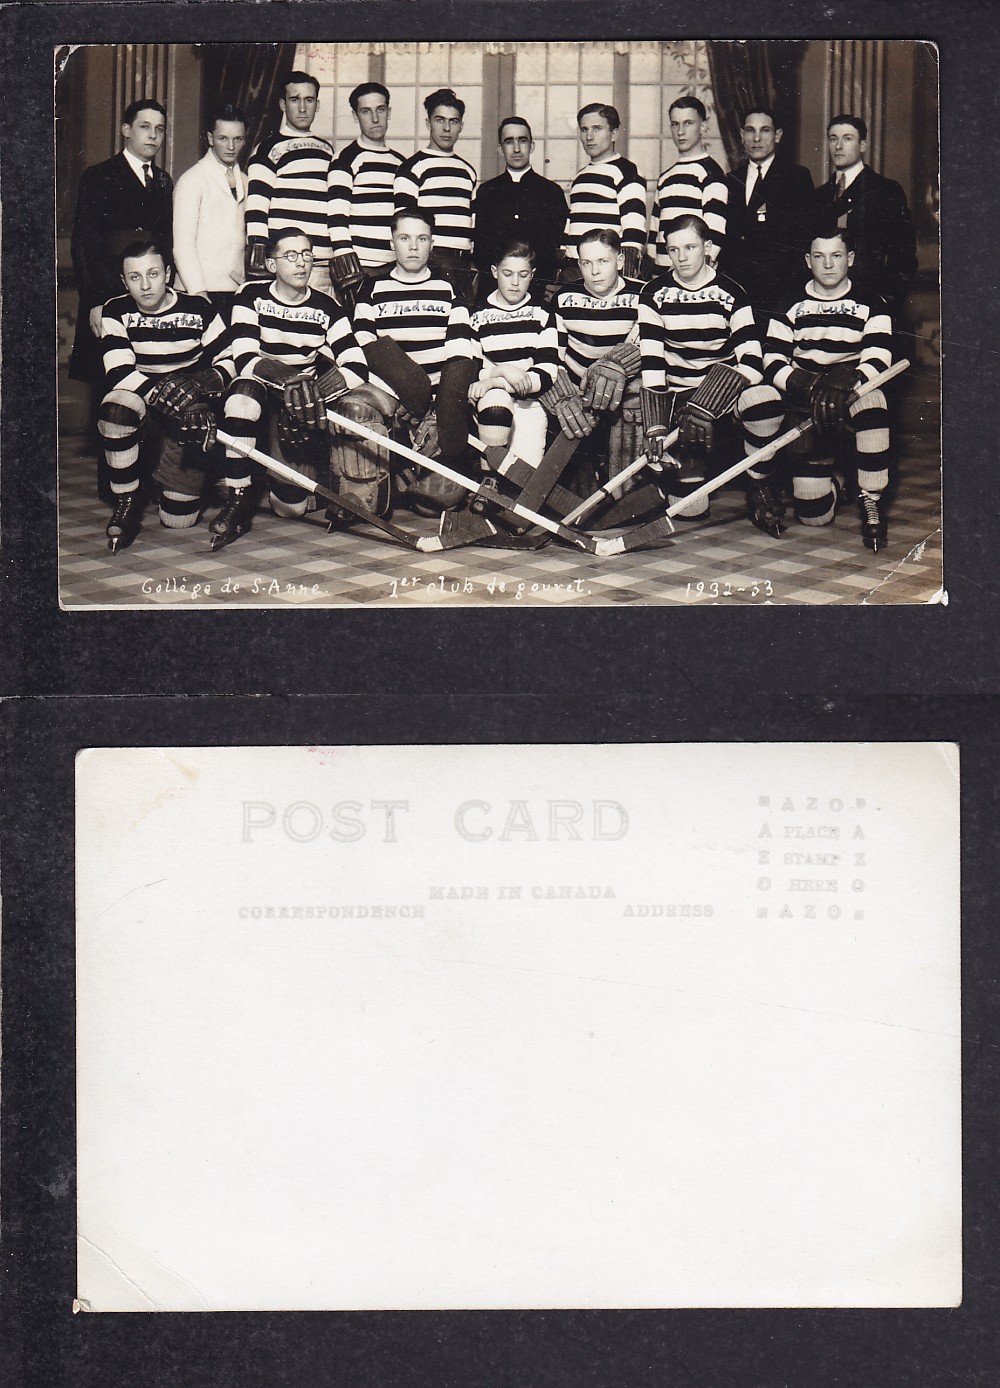 1932-33 STE-MARIE HOCKEY TEAM POST CARD photo